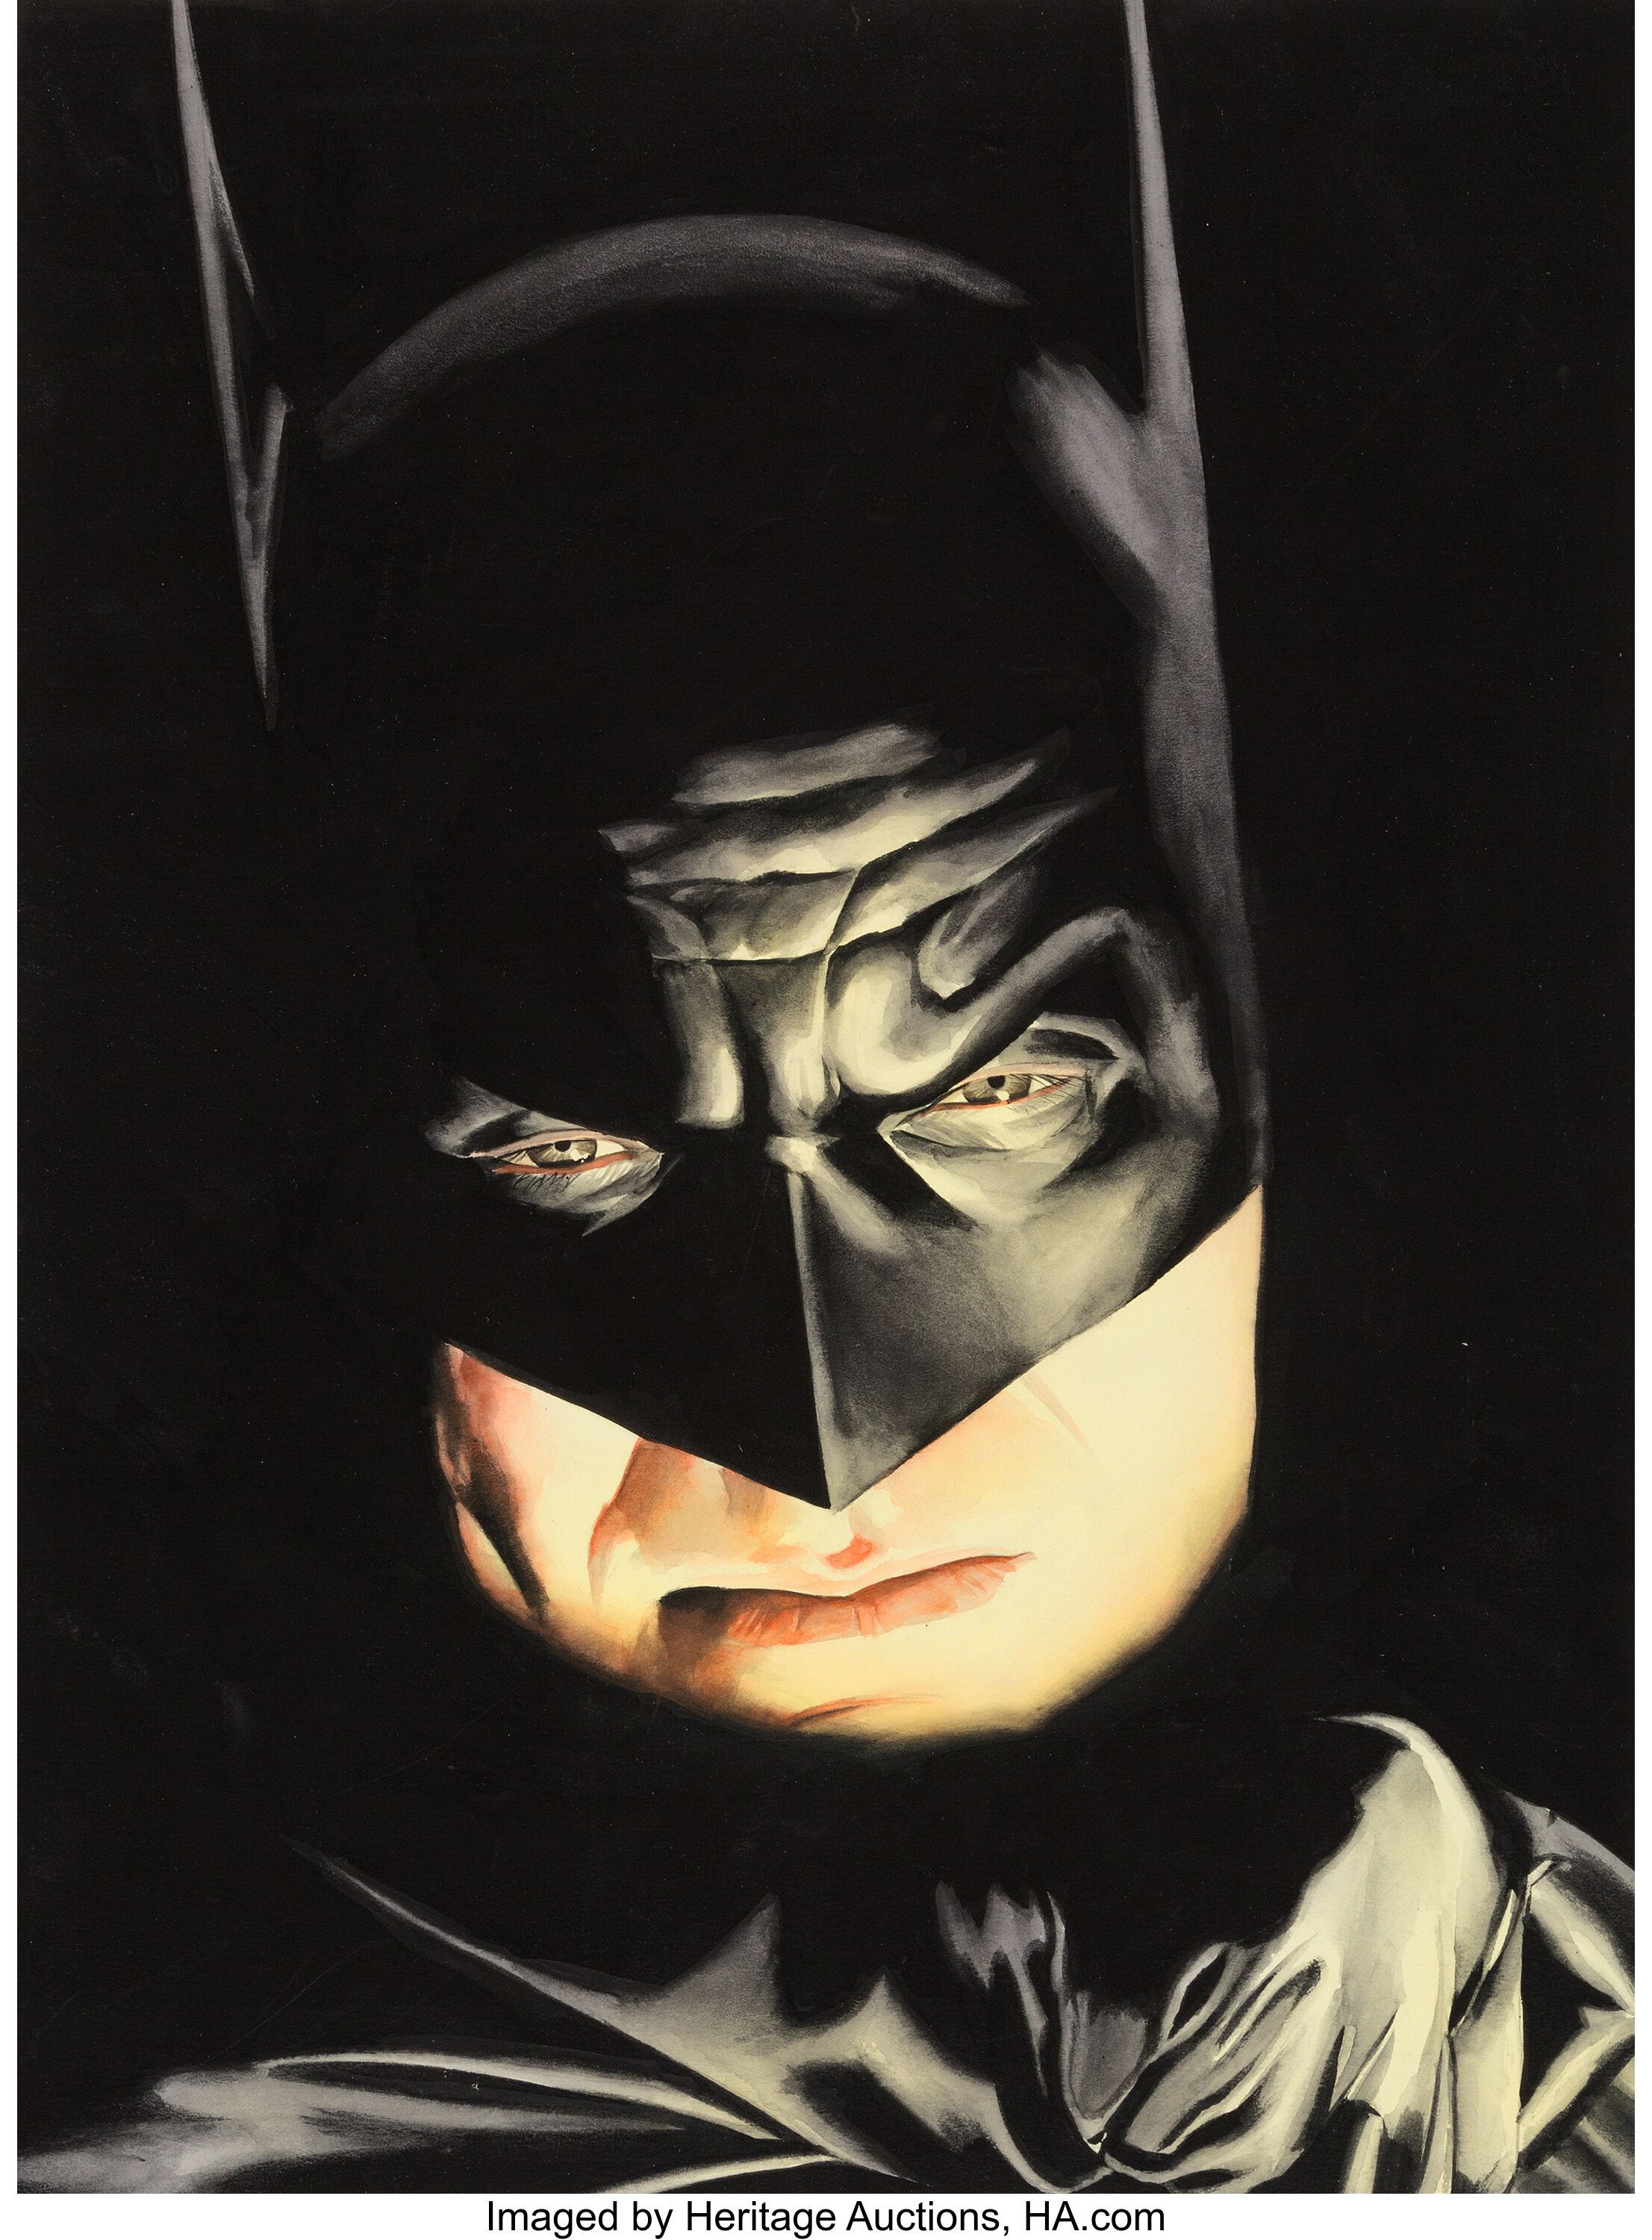 Batman War on Crime Heritage Auctions artwork